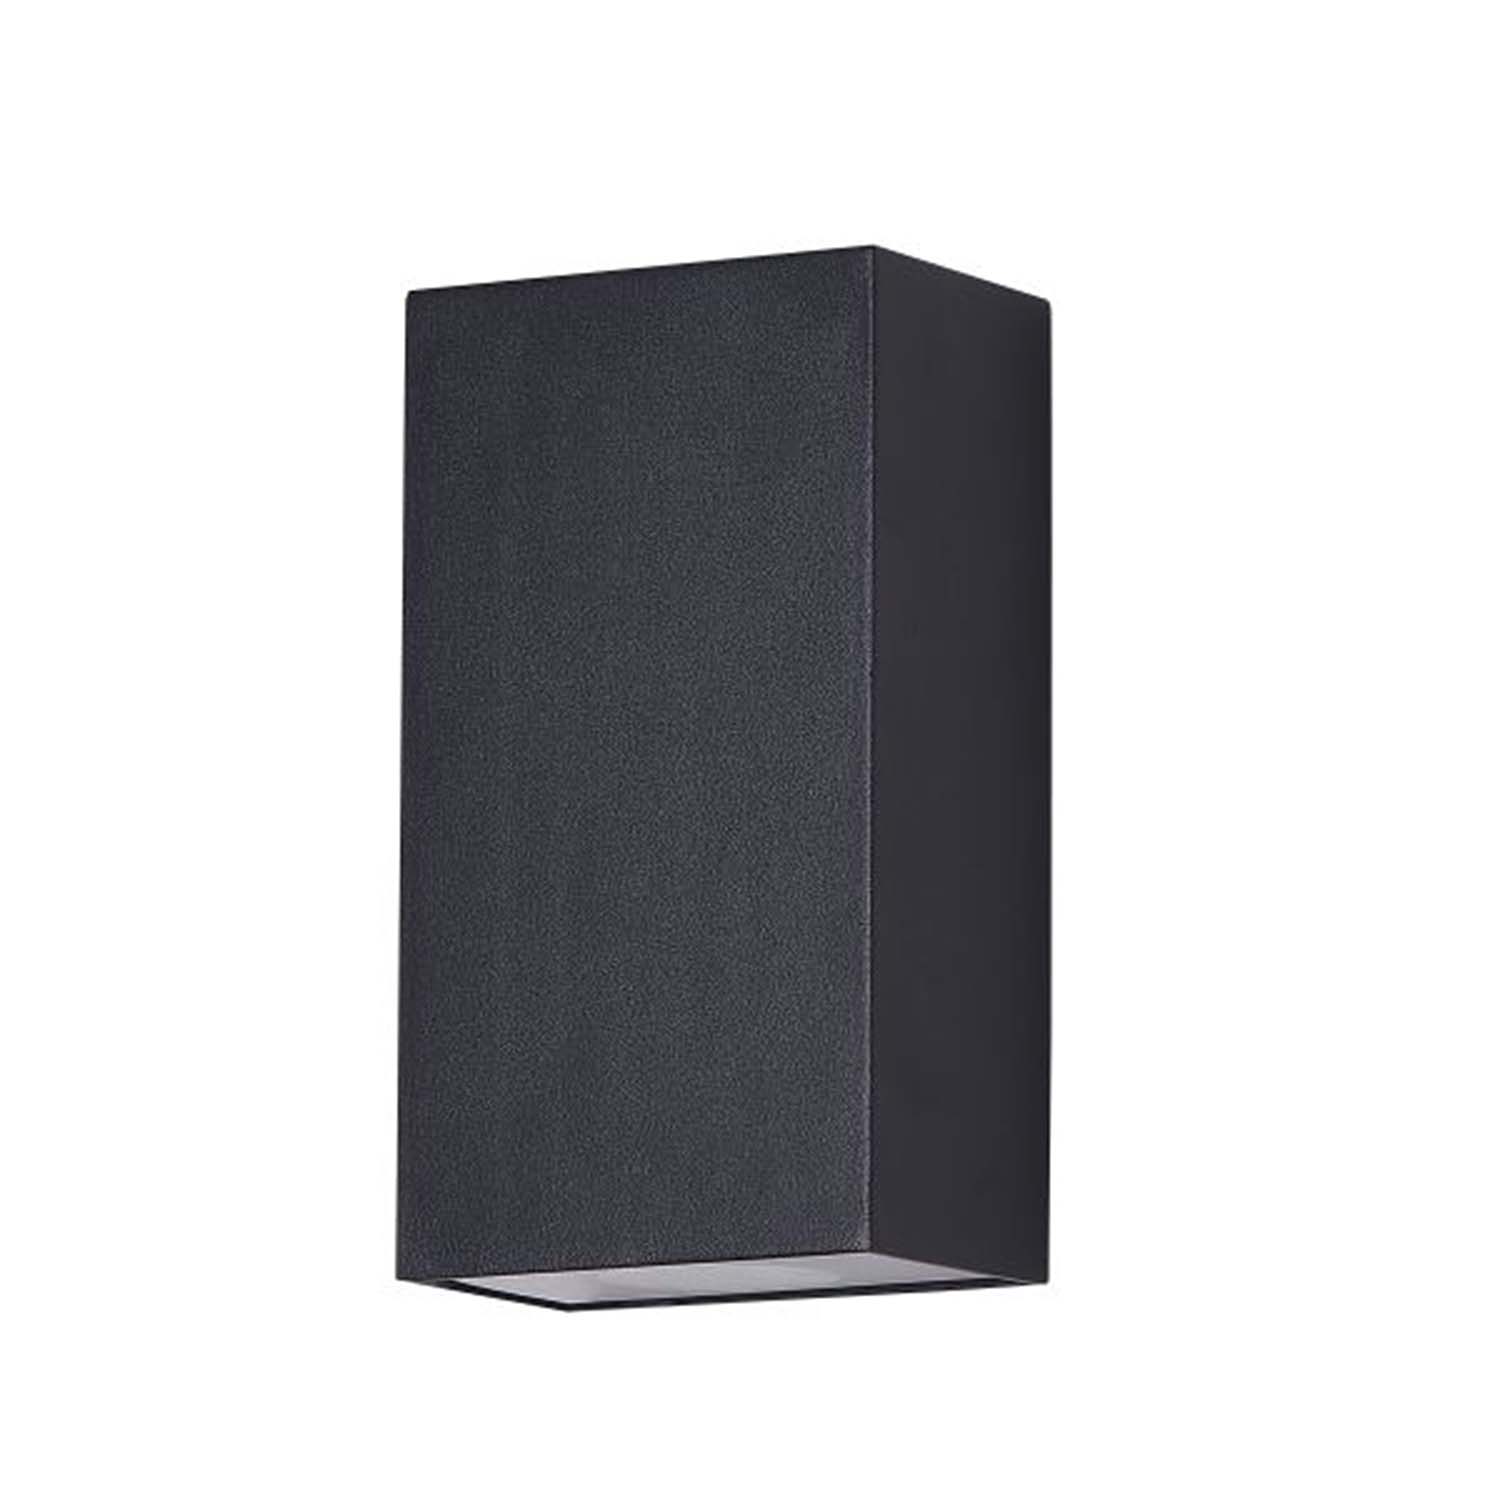 TIMES SQUARE B - Waterproof rectangular design black outdoor wall light